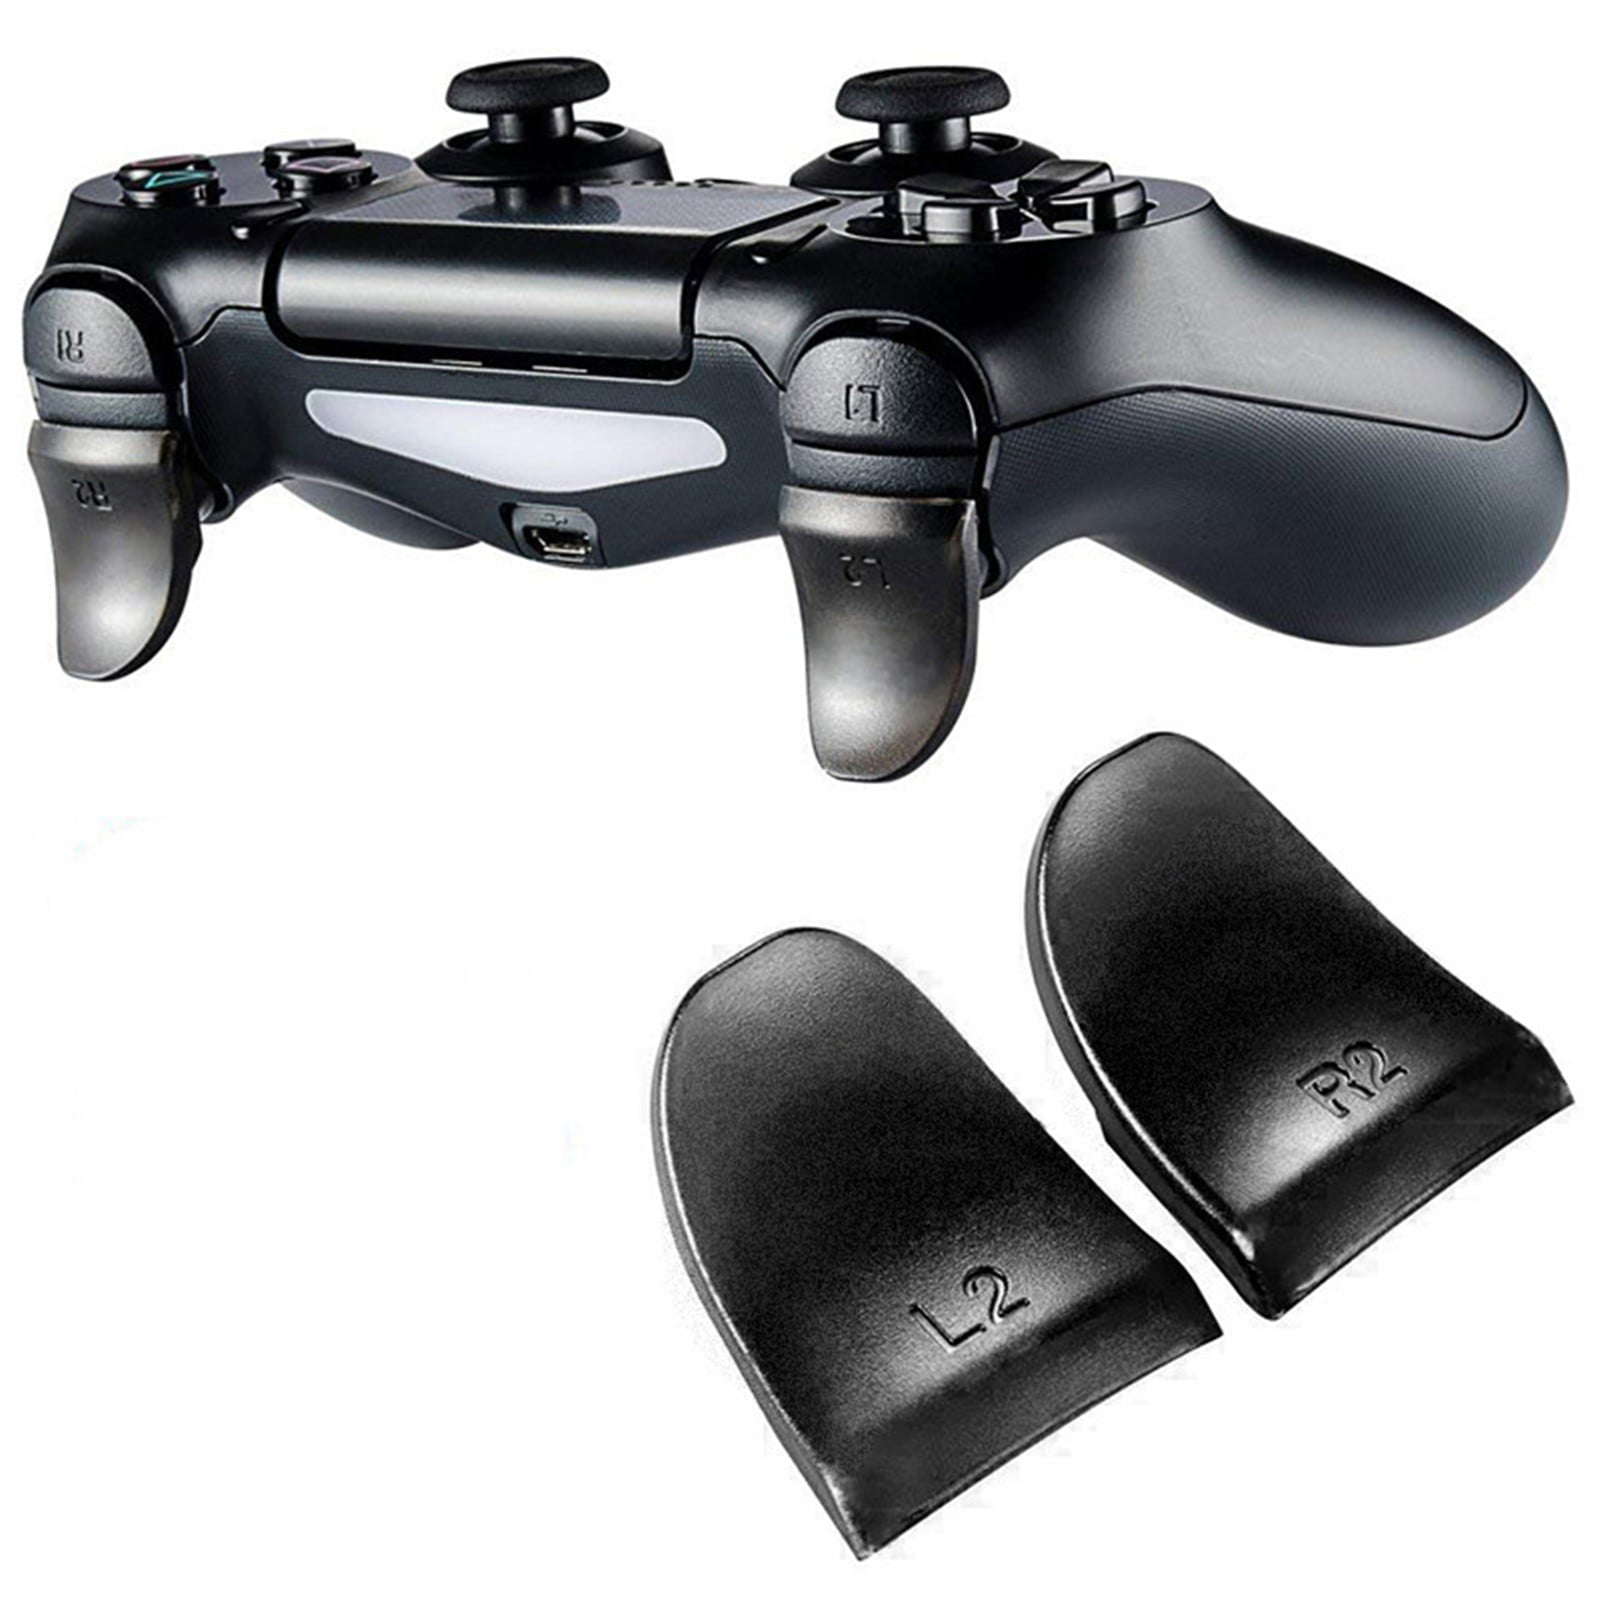 Black ABS Metal 2pcs Perfect Replacement Part 3D Controller Joystick for Playstation 4 PS4 Black